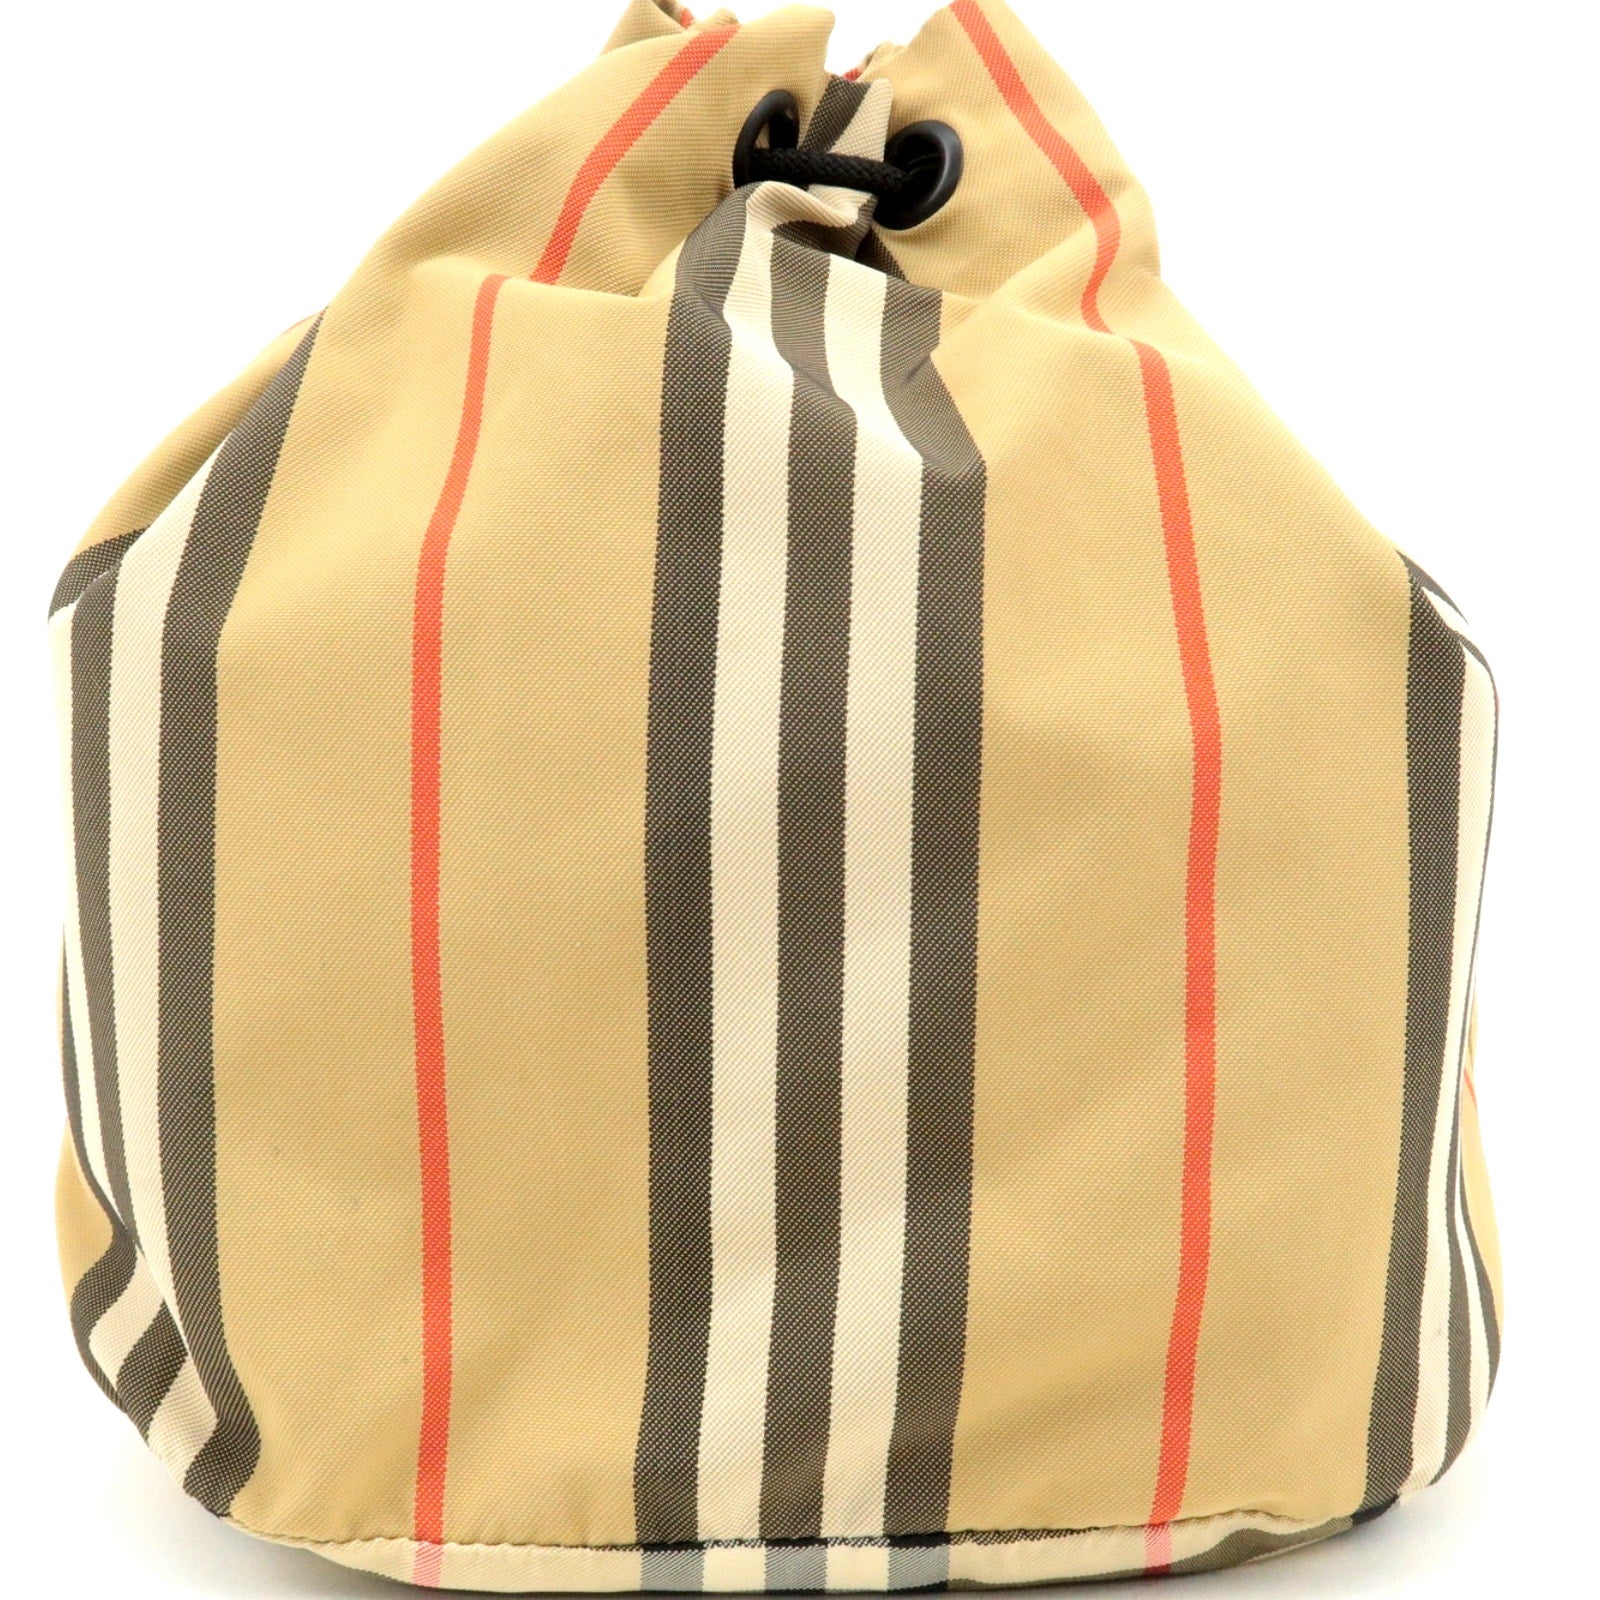 Authentic Burberry Nova Plaid Nylon Drawstring Bag